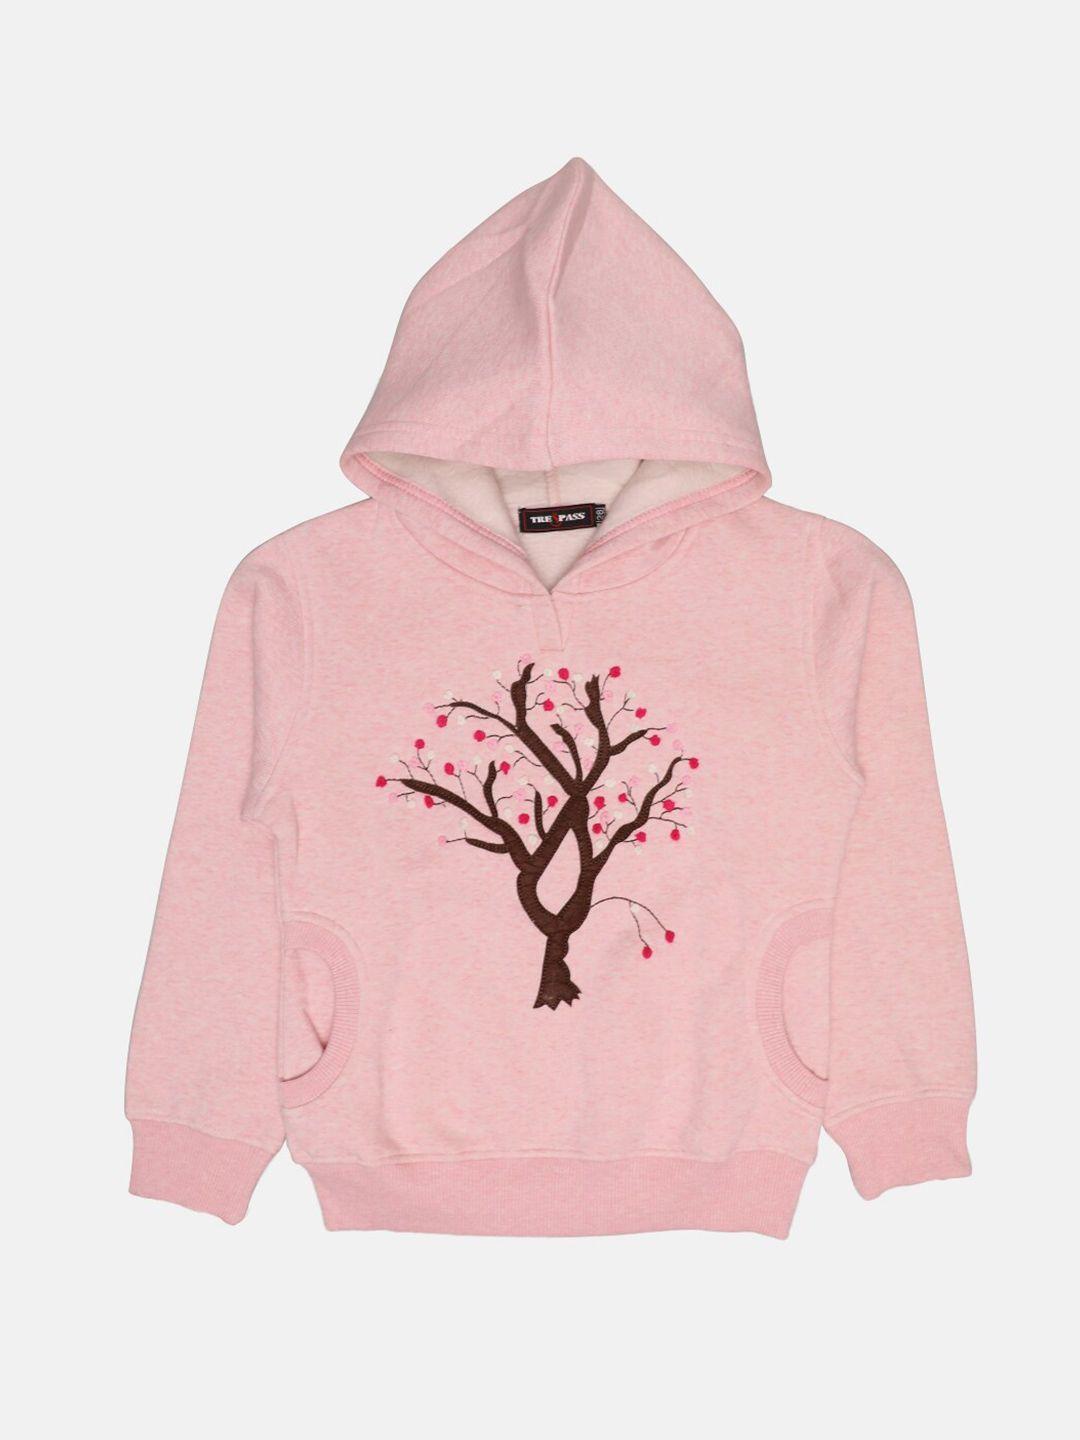 tre&pass-boys-pink-printed-hooded-cotton-sweatshirt